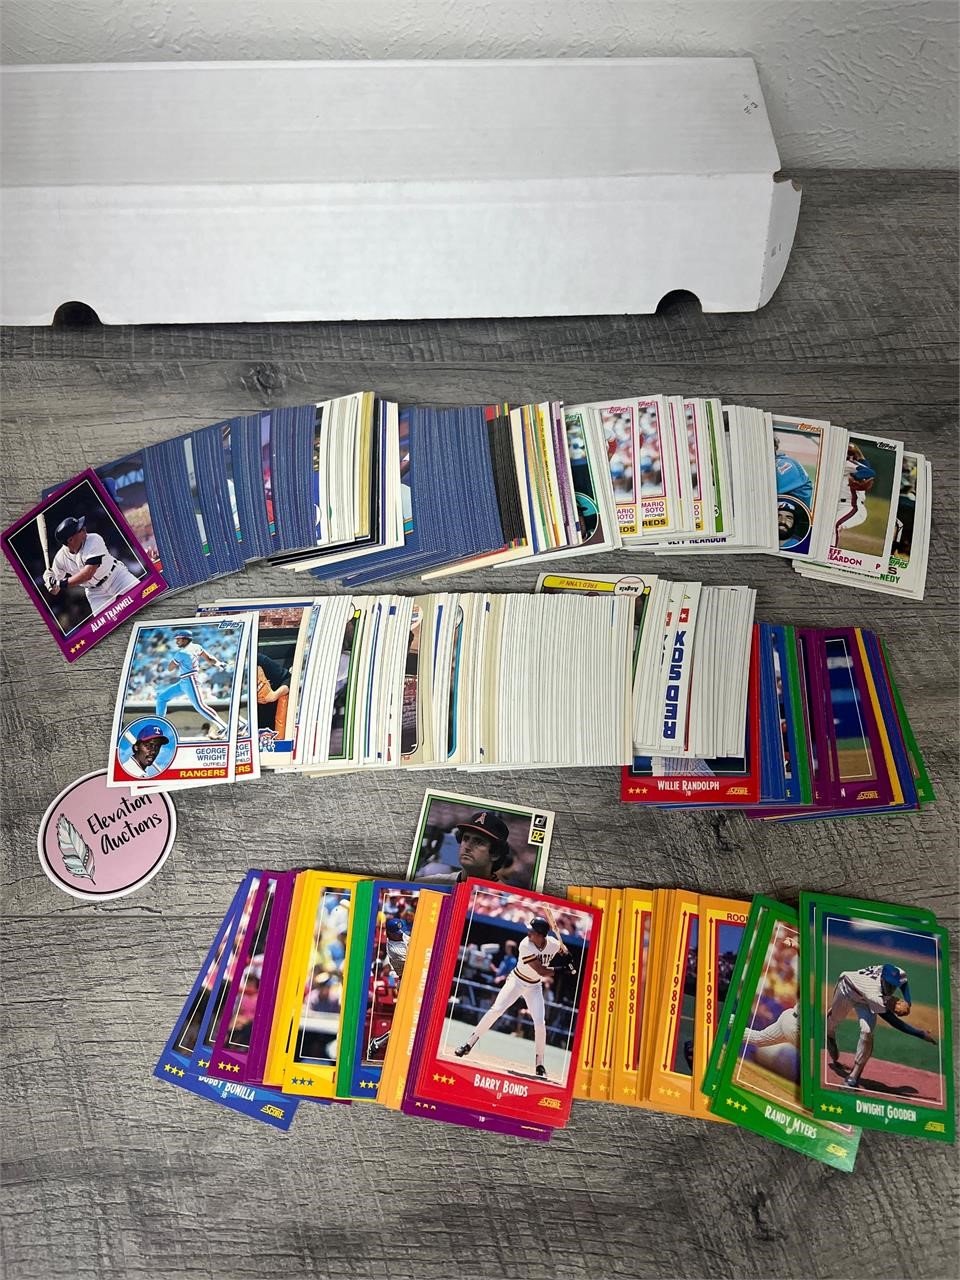 Large lot of baseball cards